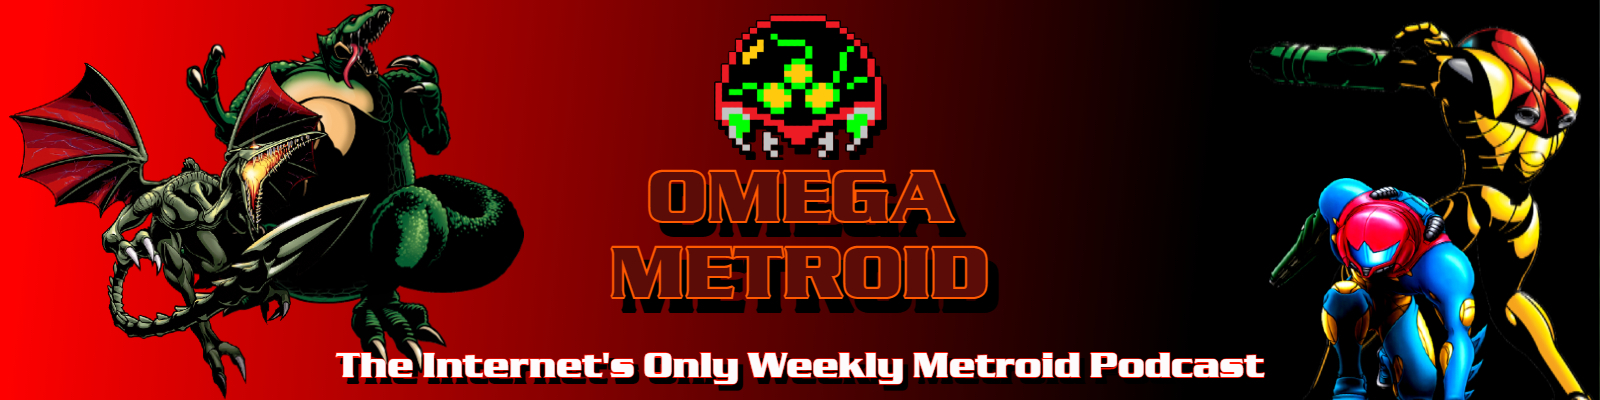 Omega Metroid Podcast